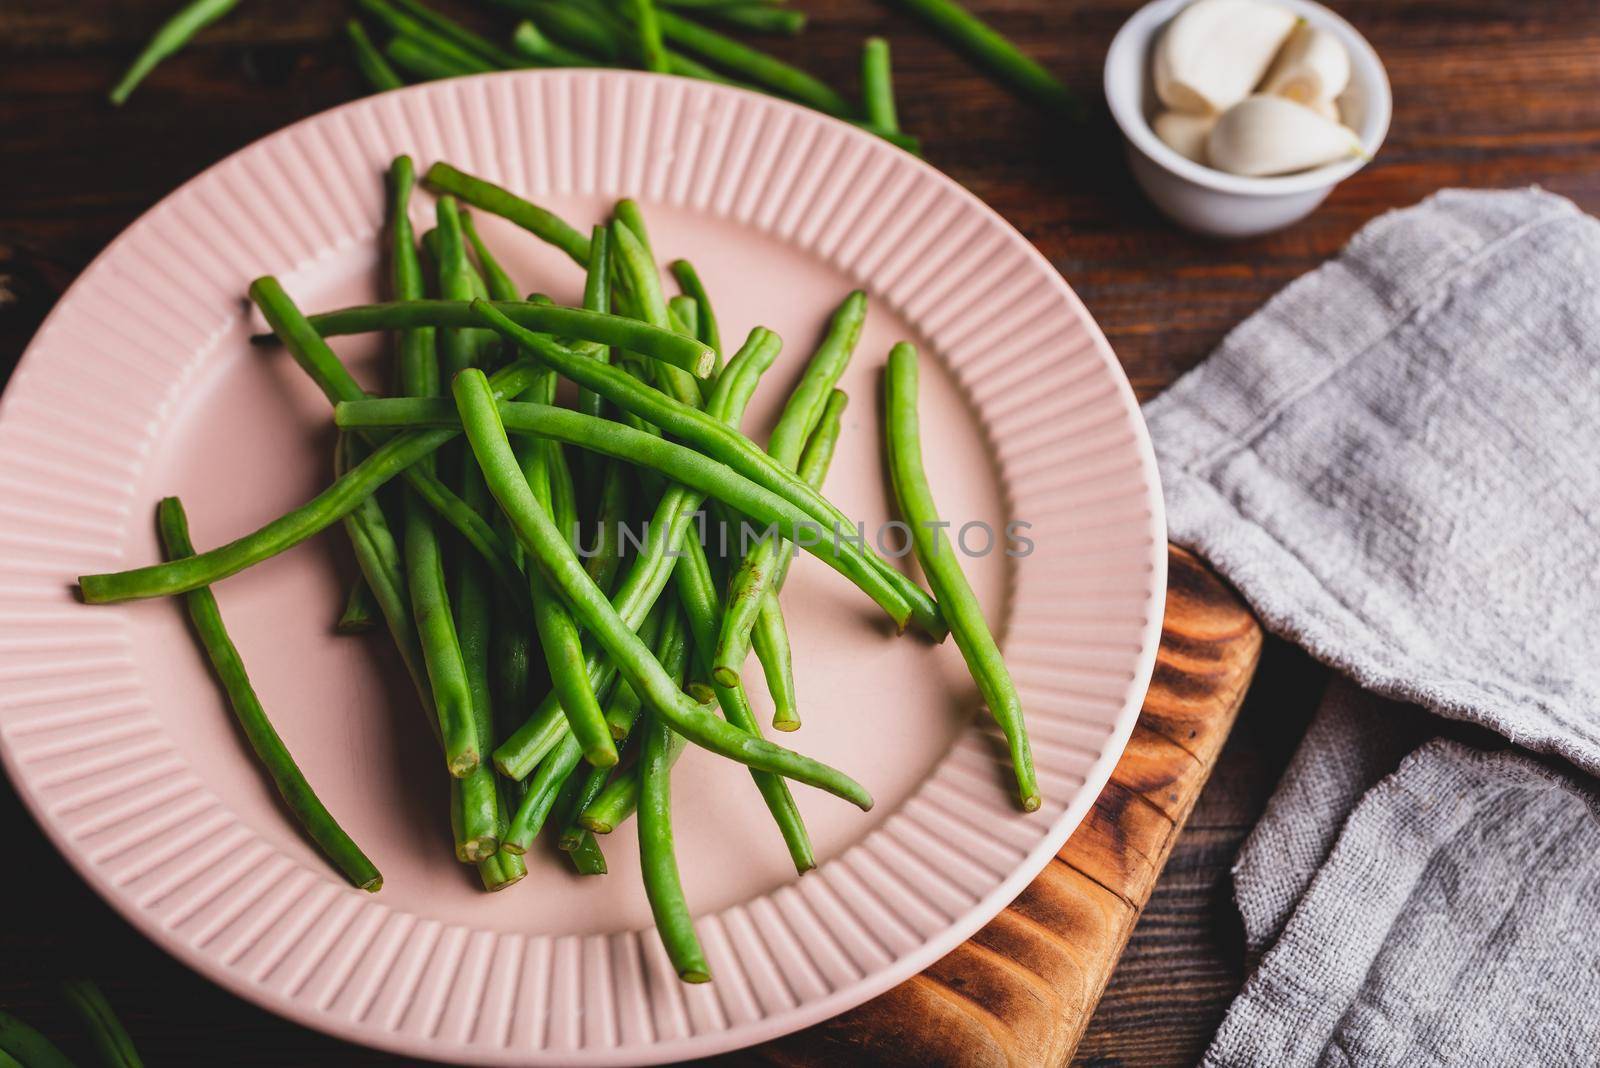 Green Bean on Plate by Seva_blsv